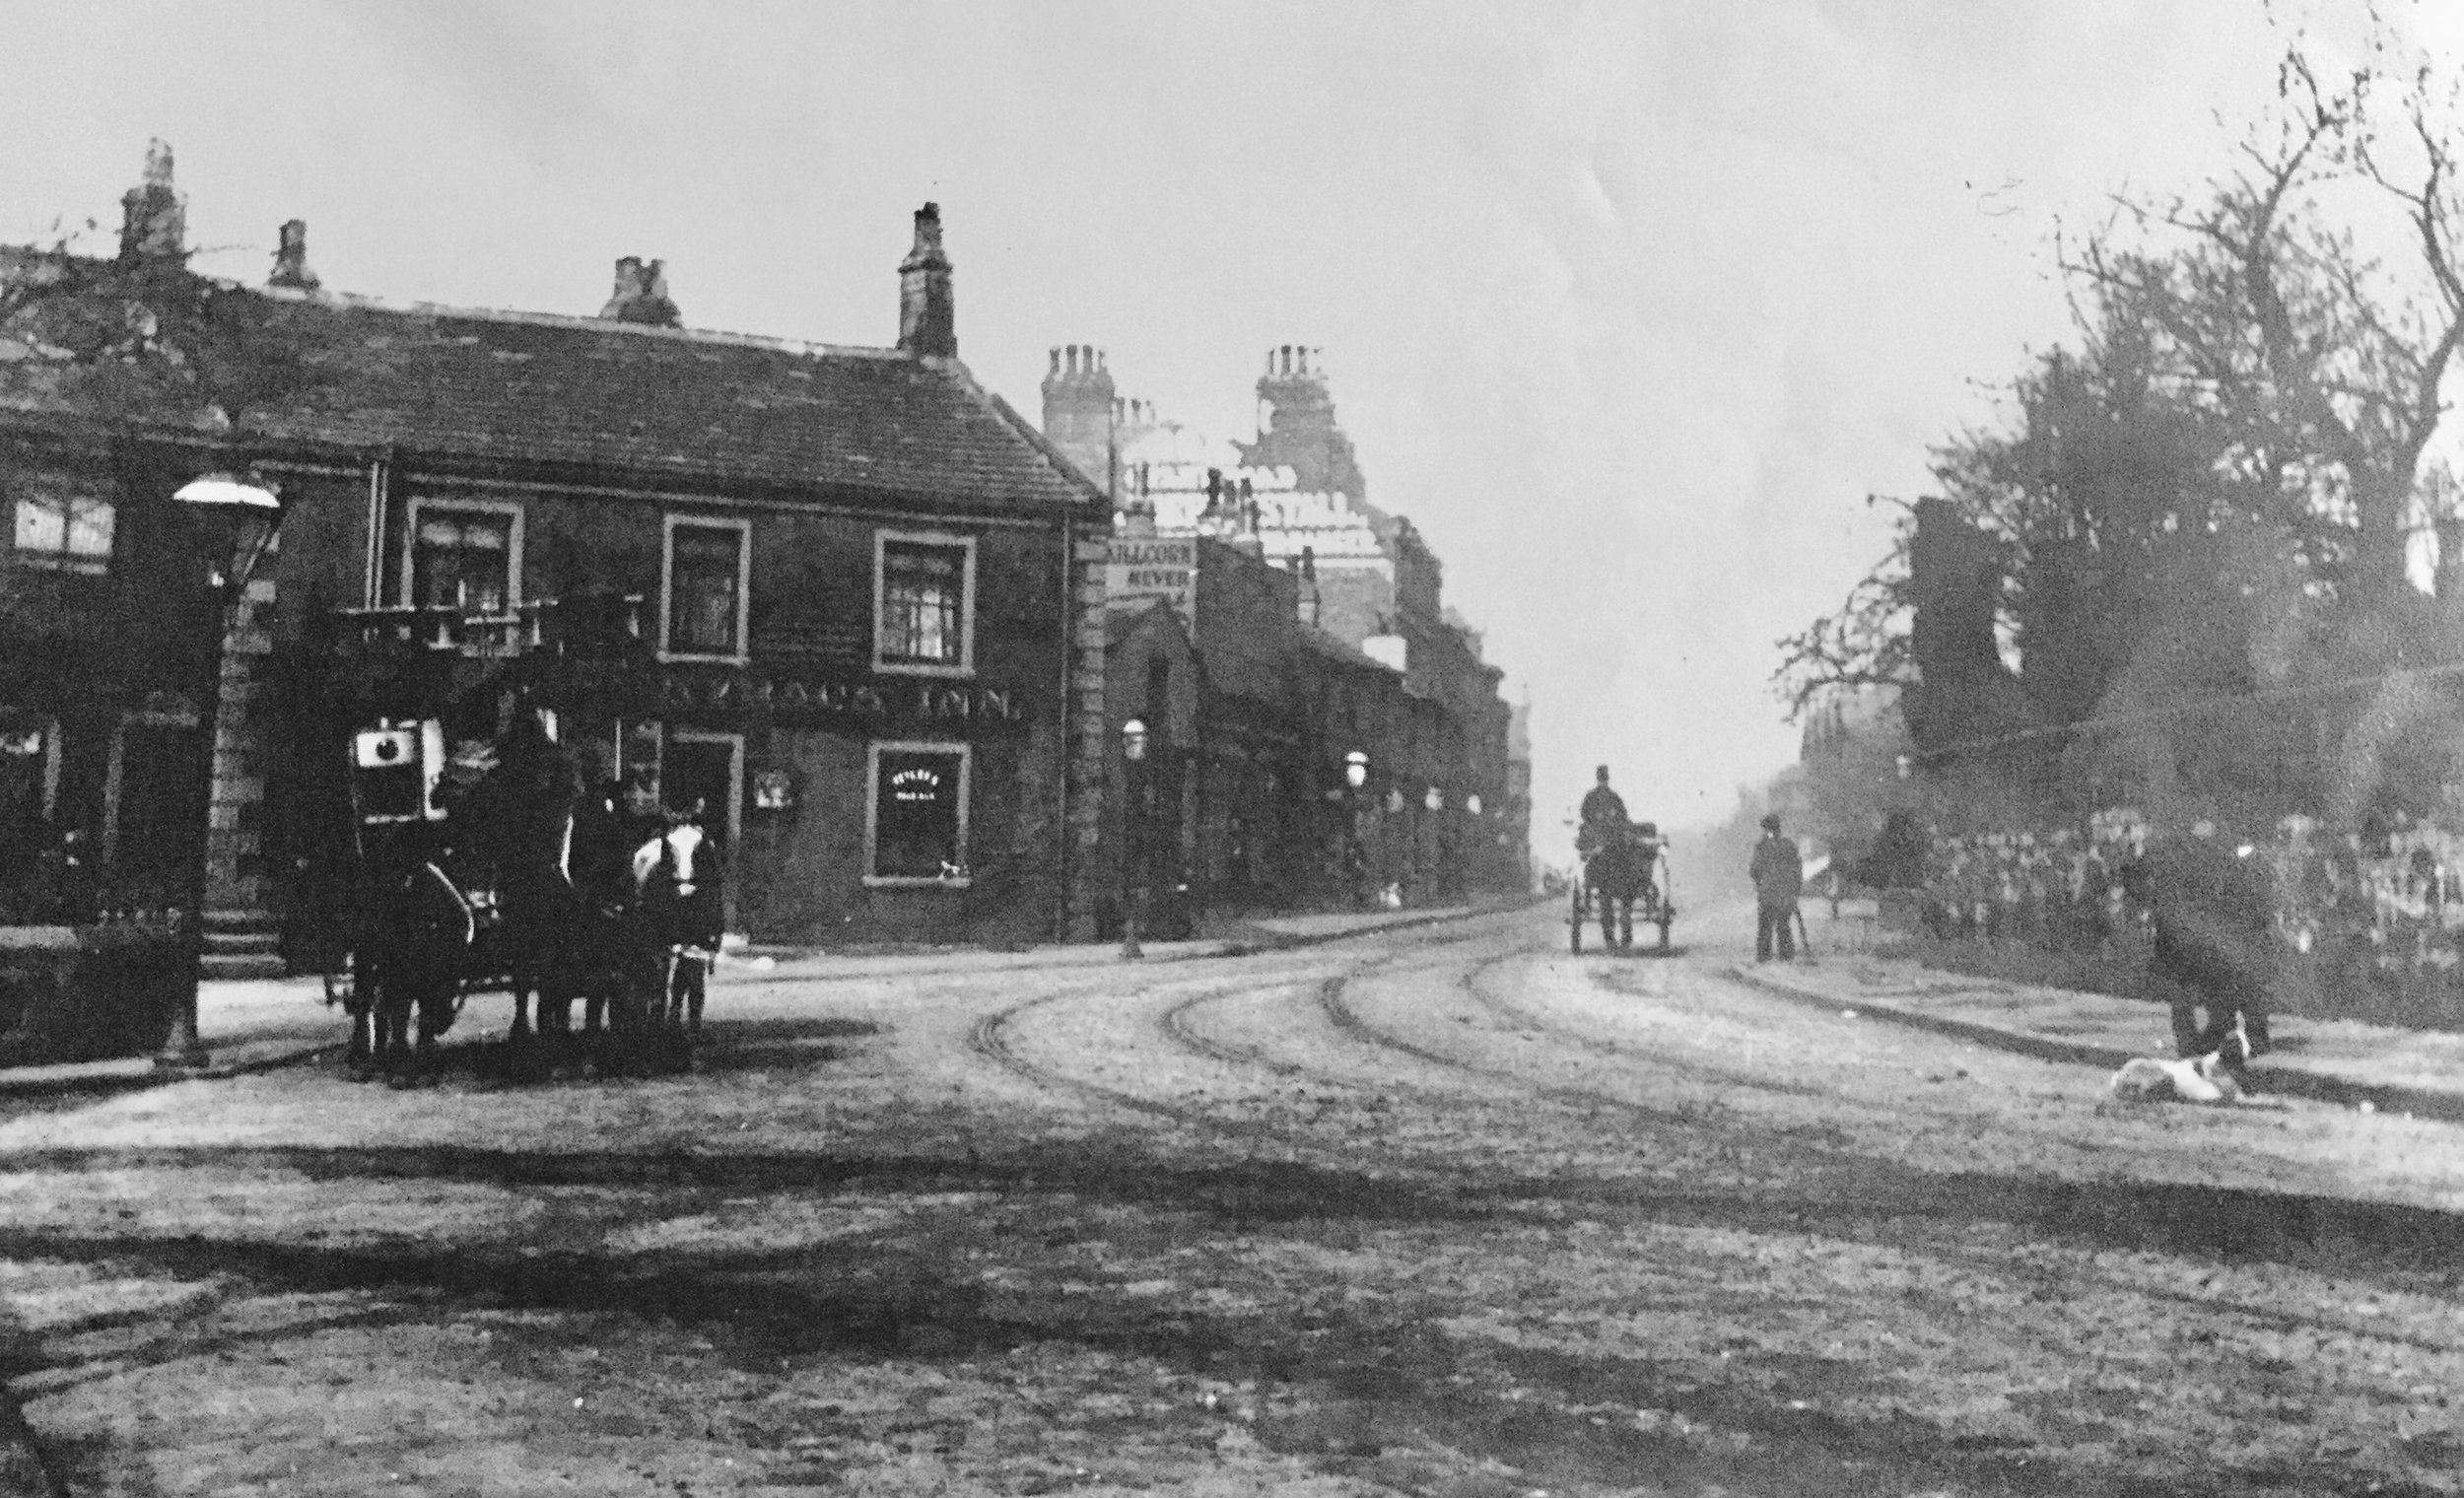 Otley Road and Skyrack Inn, circa 1890